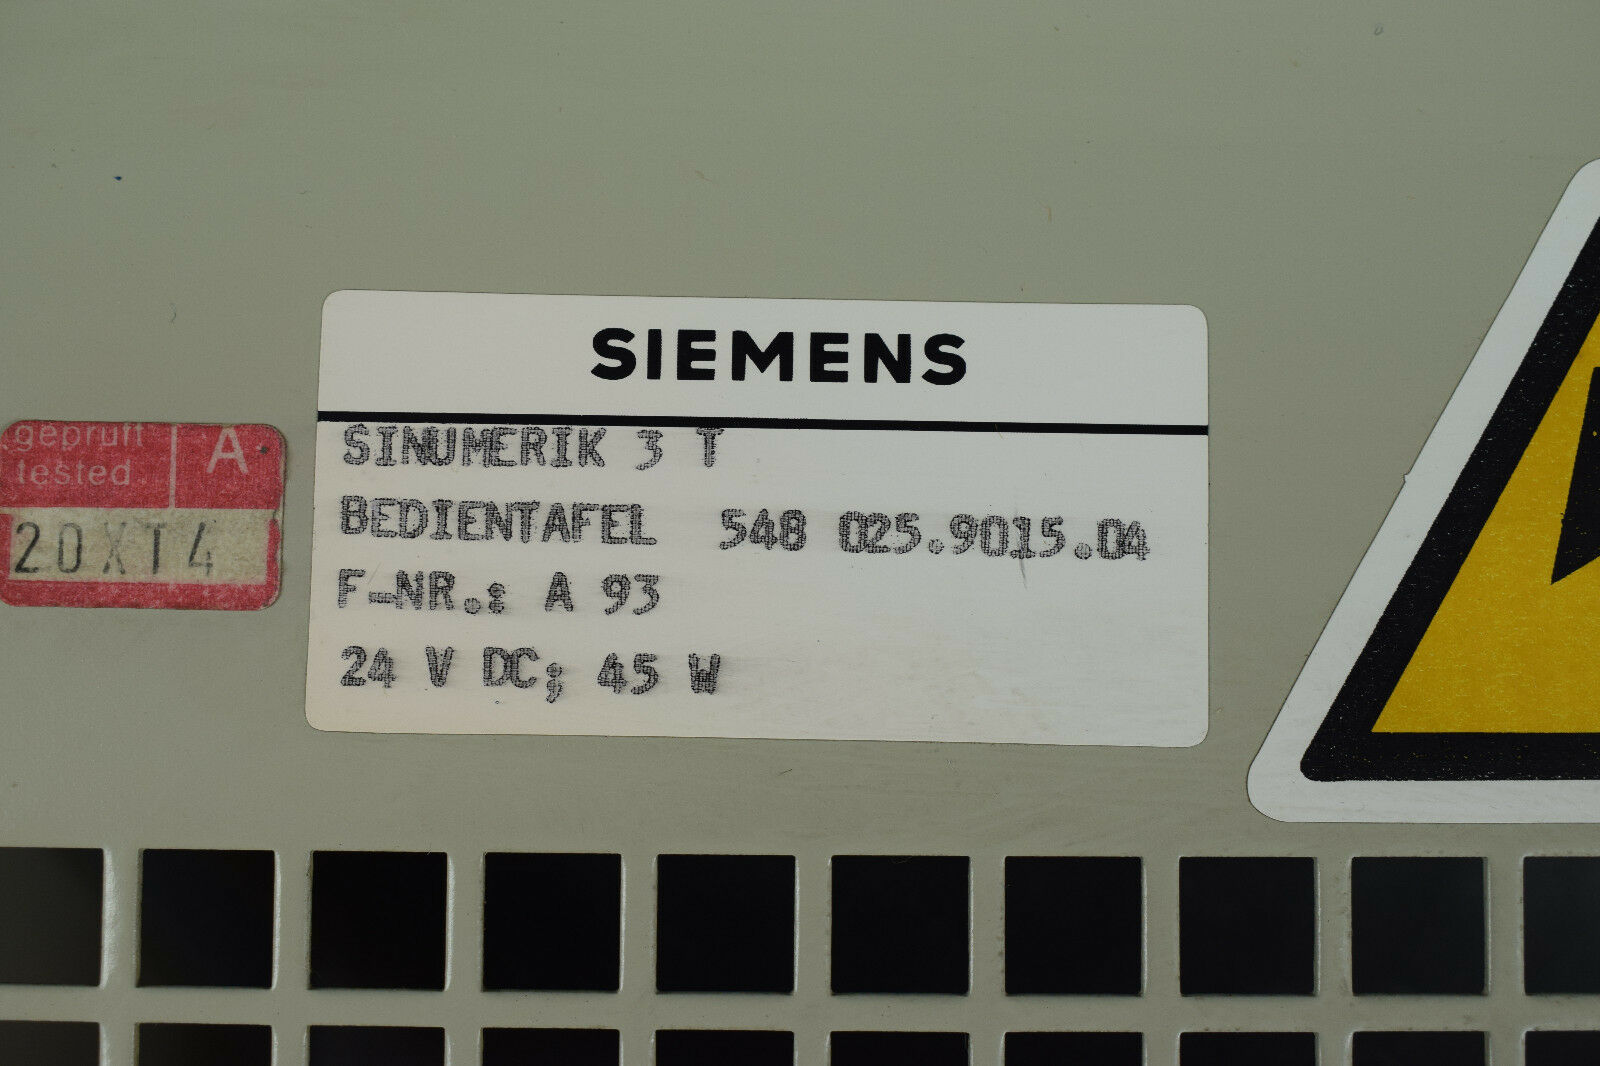 Siemens Monitor 9 Monochrome 579417 TA Magnetek Bedientafel